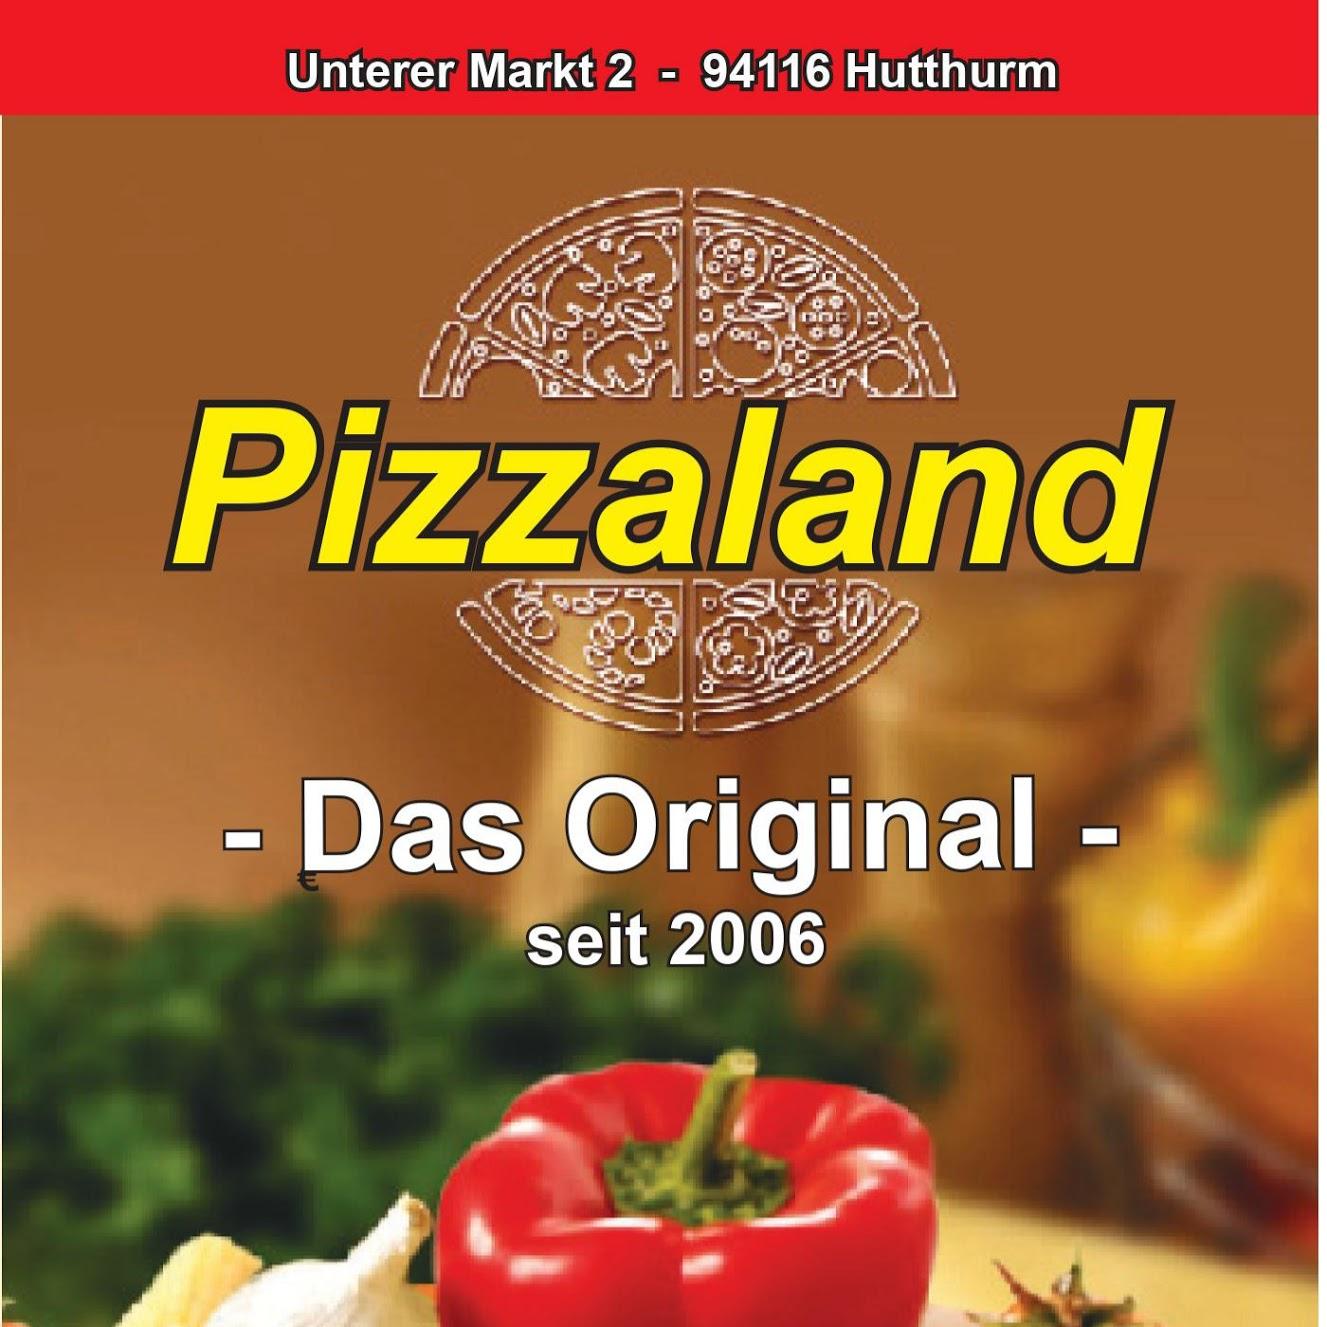 Restaurant "Pizzaland" in Hutthurm